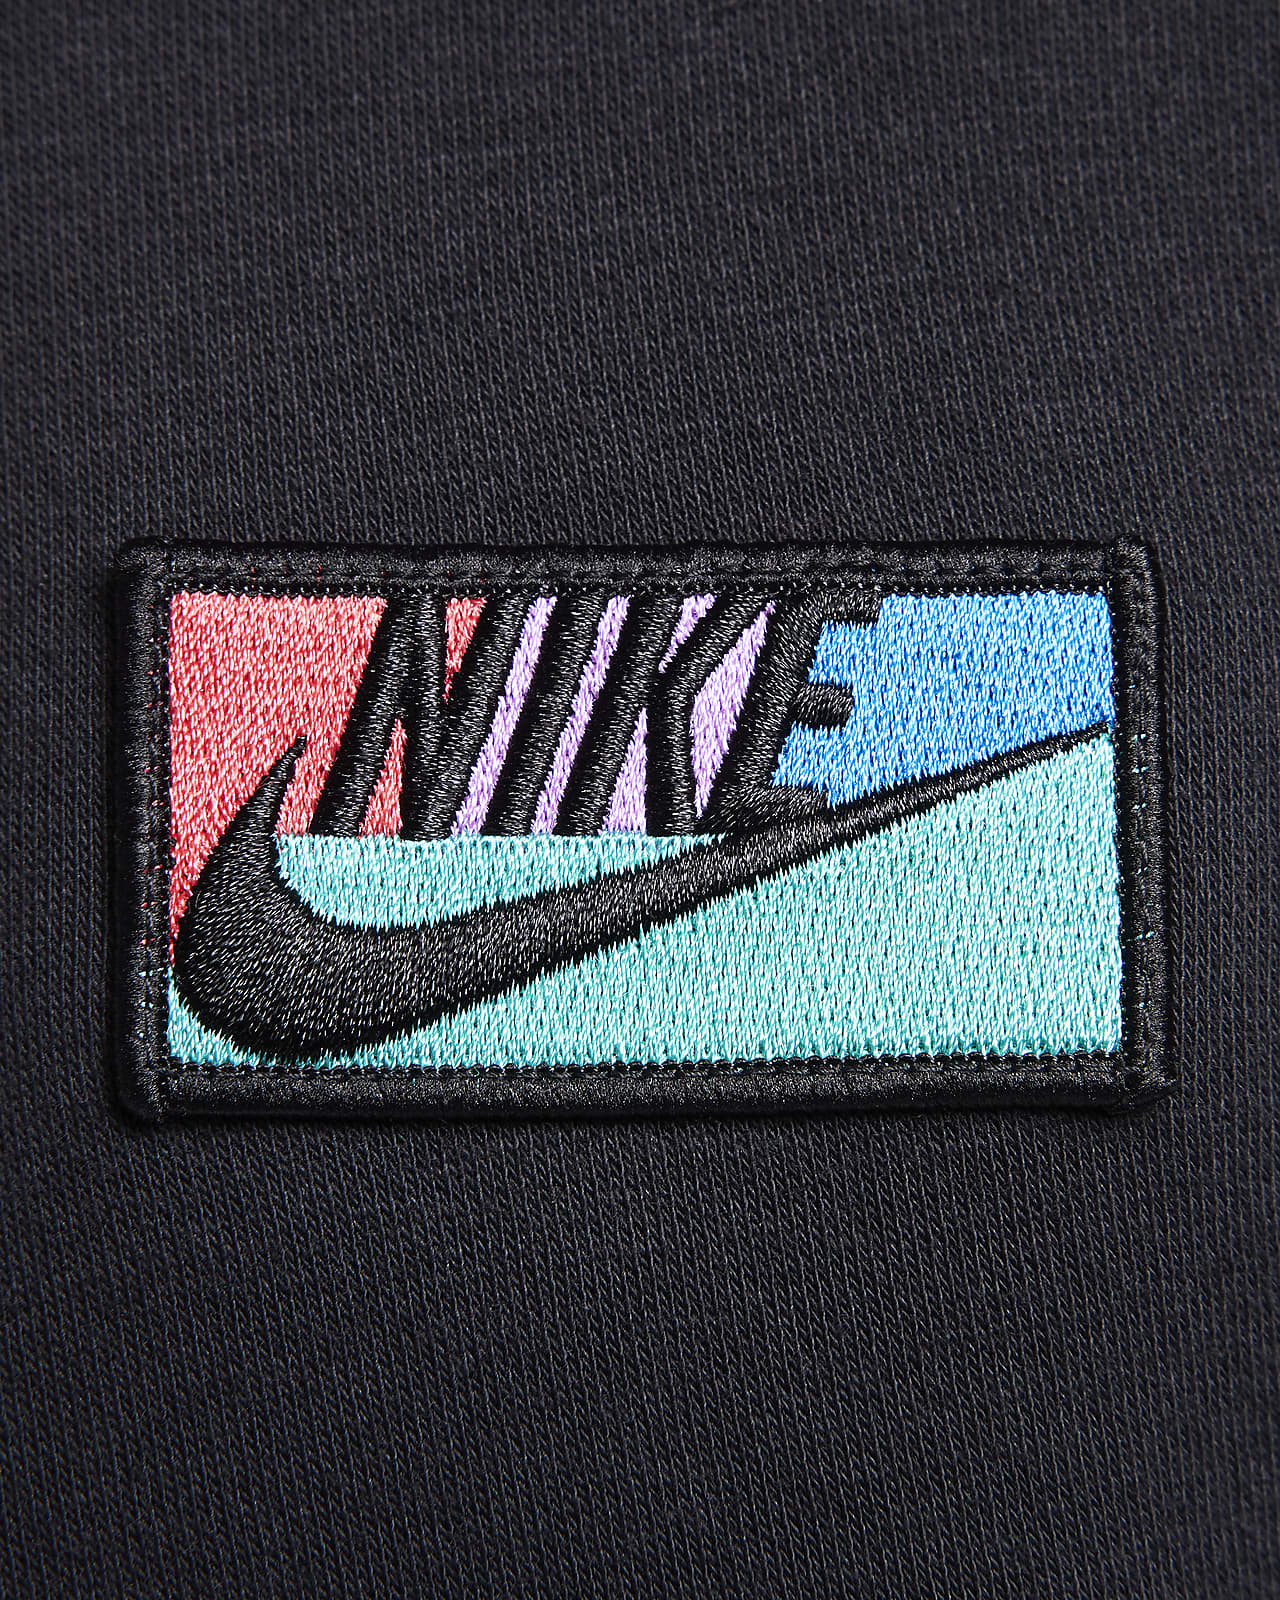 Nike Sportswear Men's Club Fleece Hoodie (Black/Green Optimist, Small) :  : Clothing, Shoes & Accessories